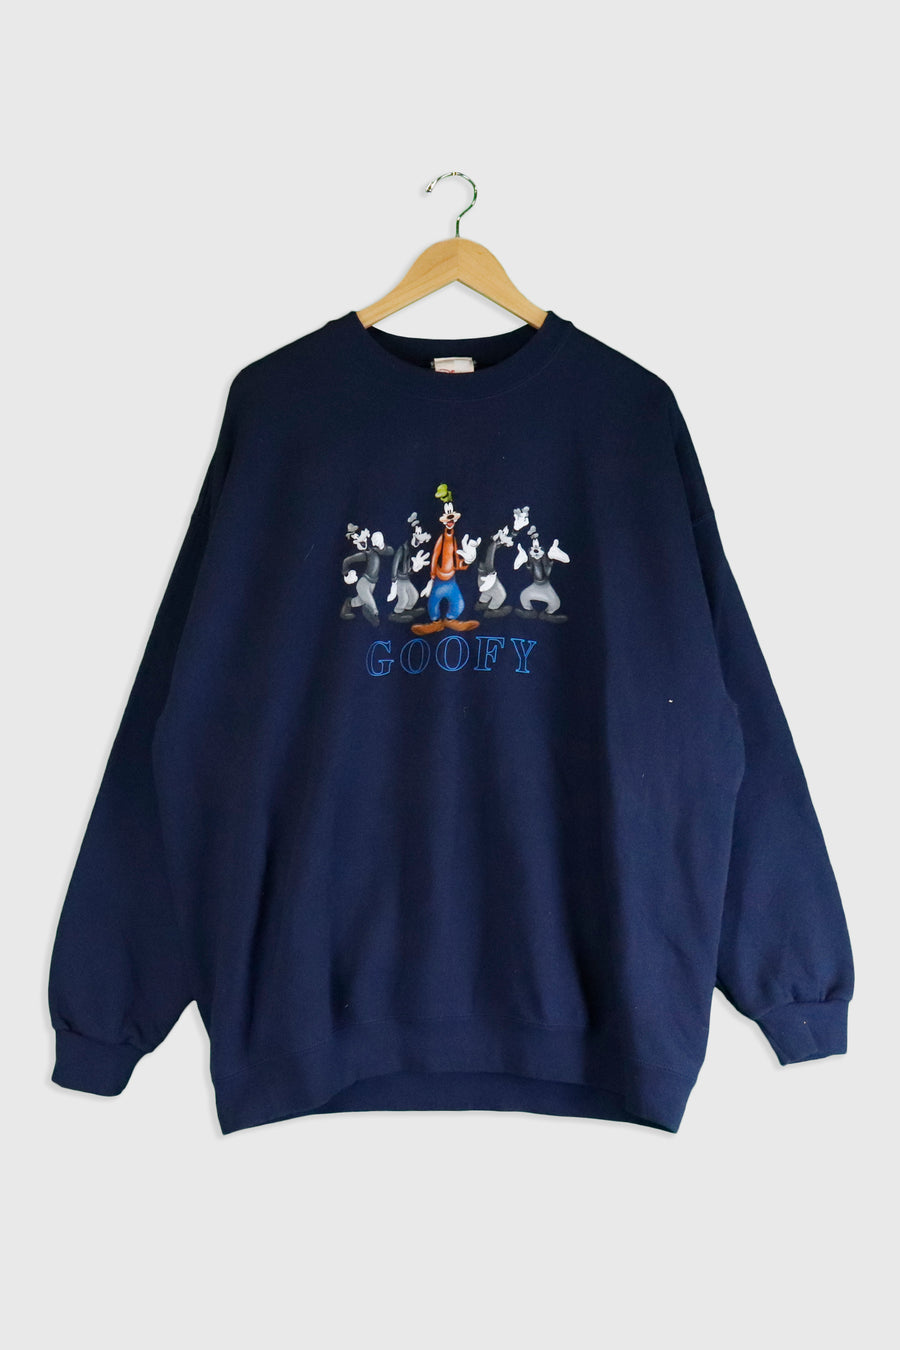 Vintage Disney Goofy Odd One Out Sweatshirt Sz 2XL